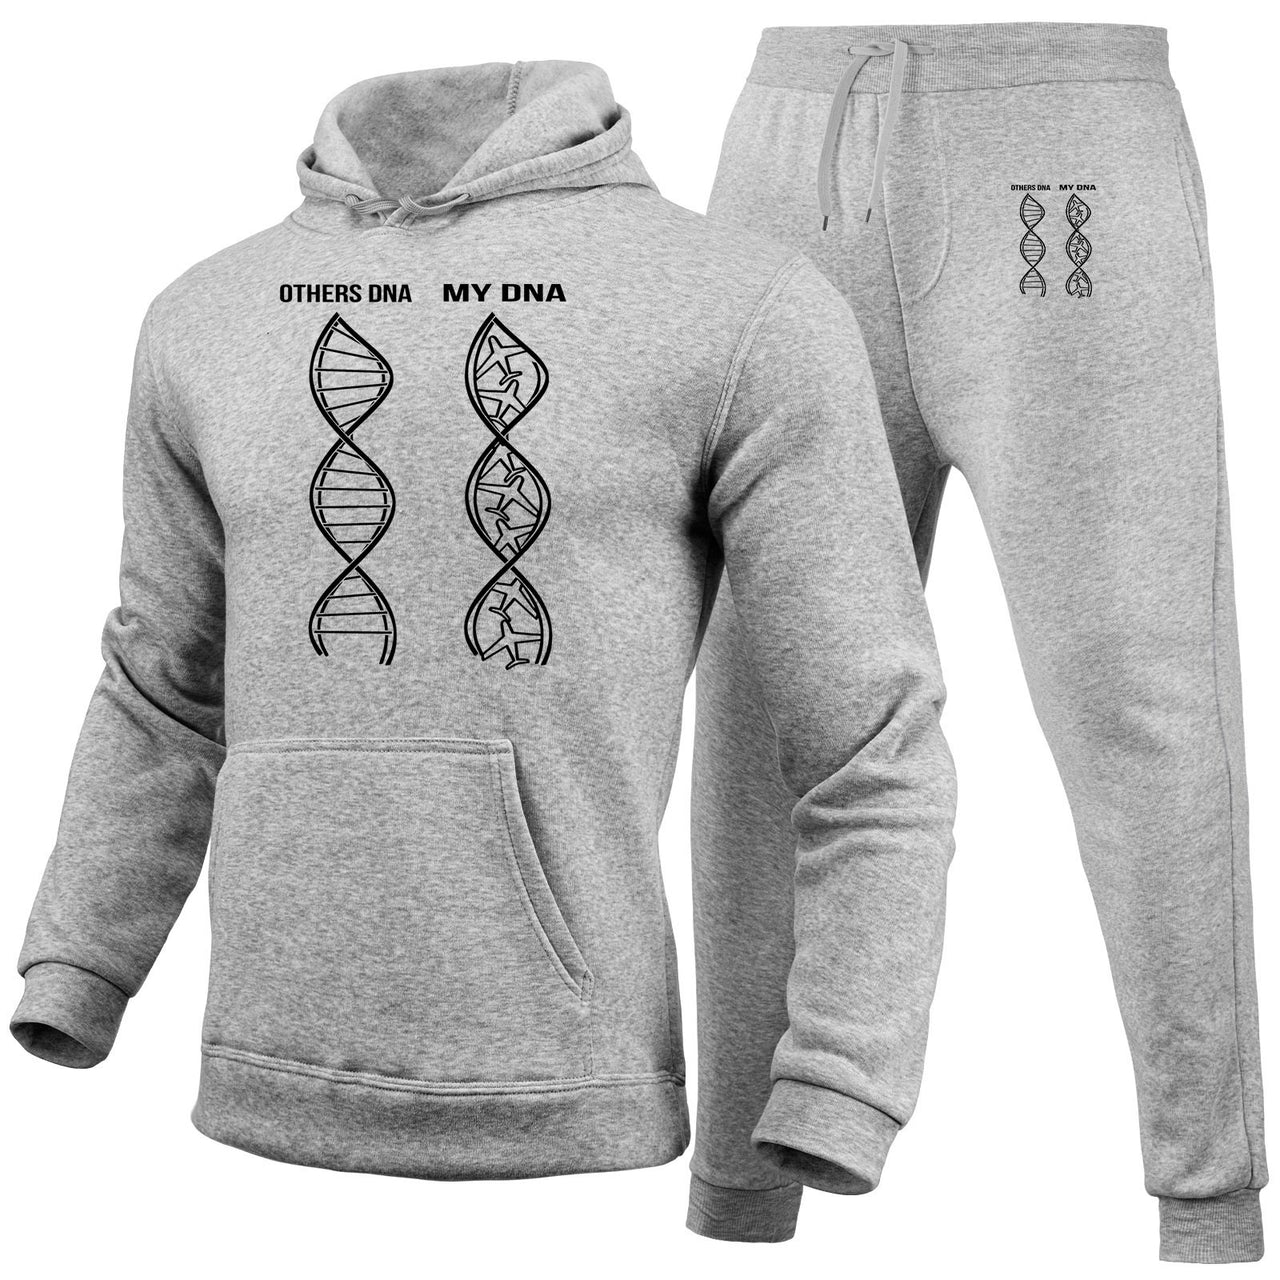 Aviation DNA Designed Hoodies & Sweatpants Set